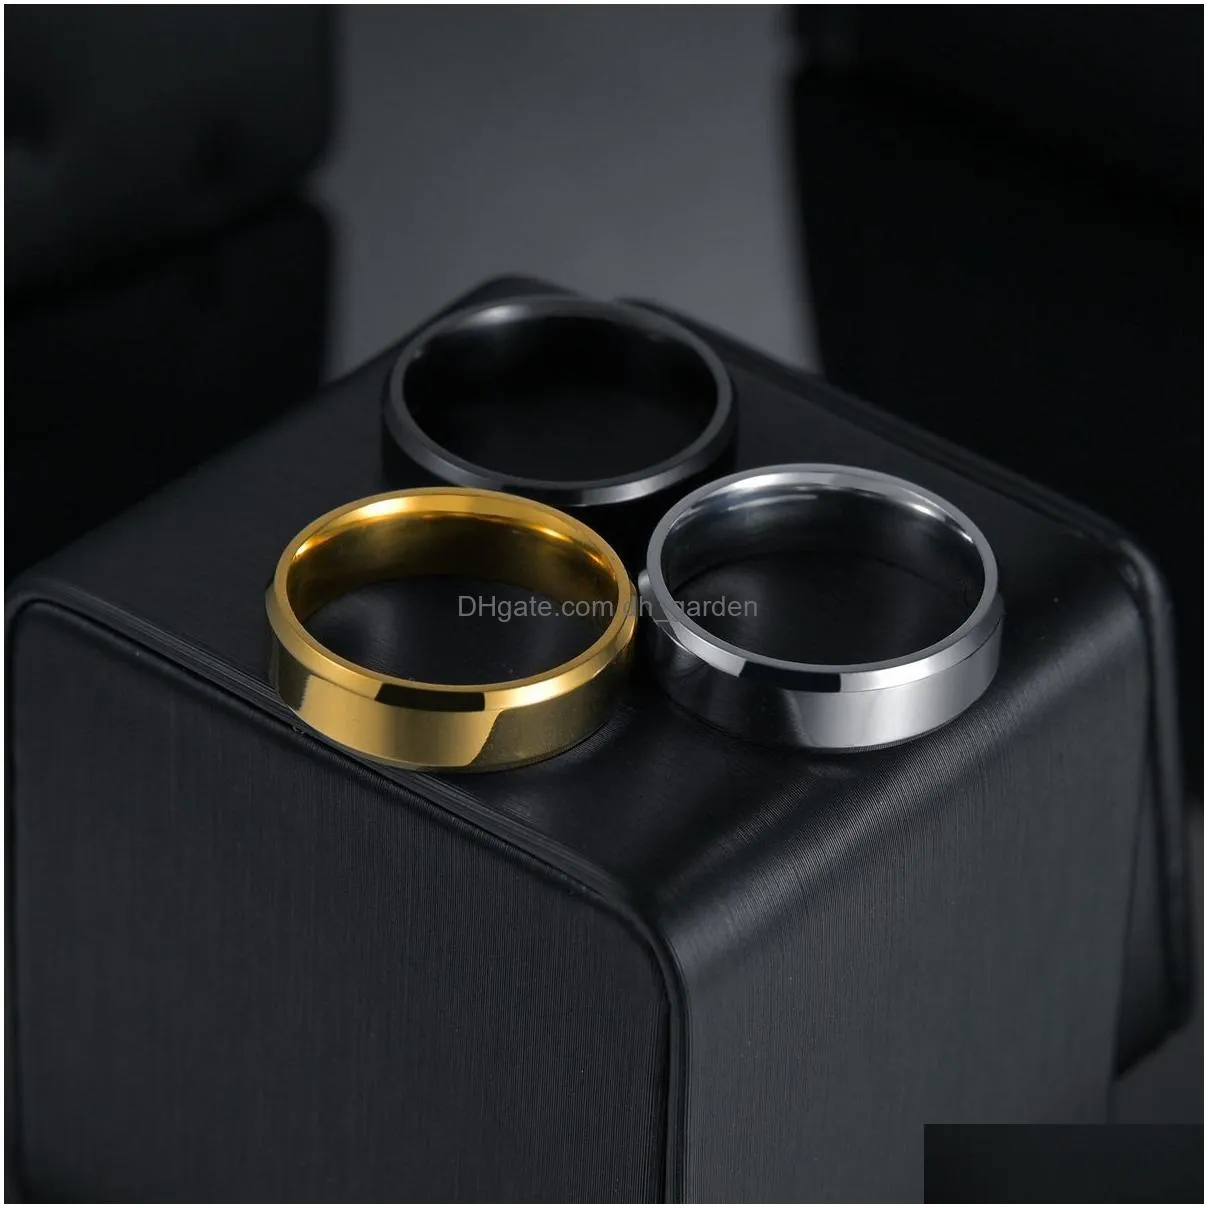 Stainless Steel Black Rings For Women Wedding Ring Men Jewelry Width 6Mm Dhgarden Ot5Sy